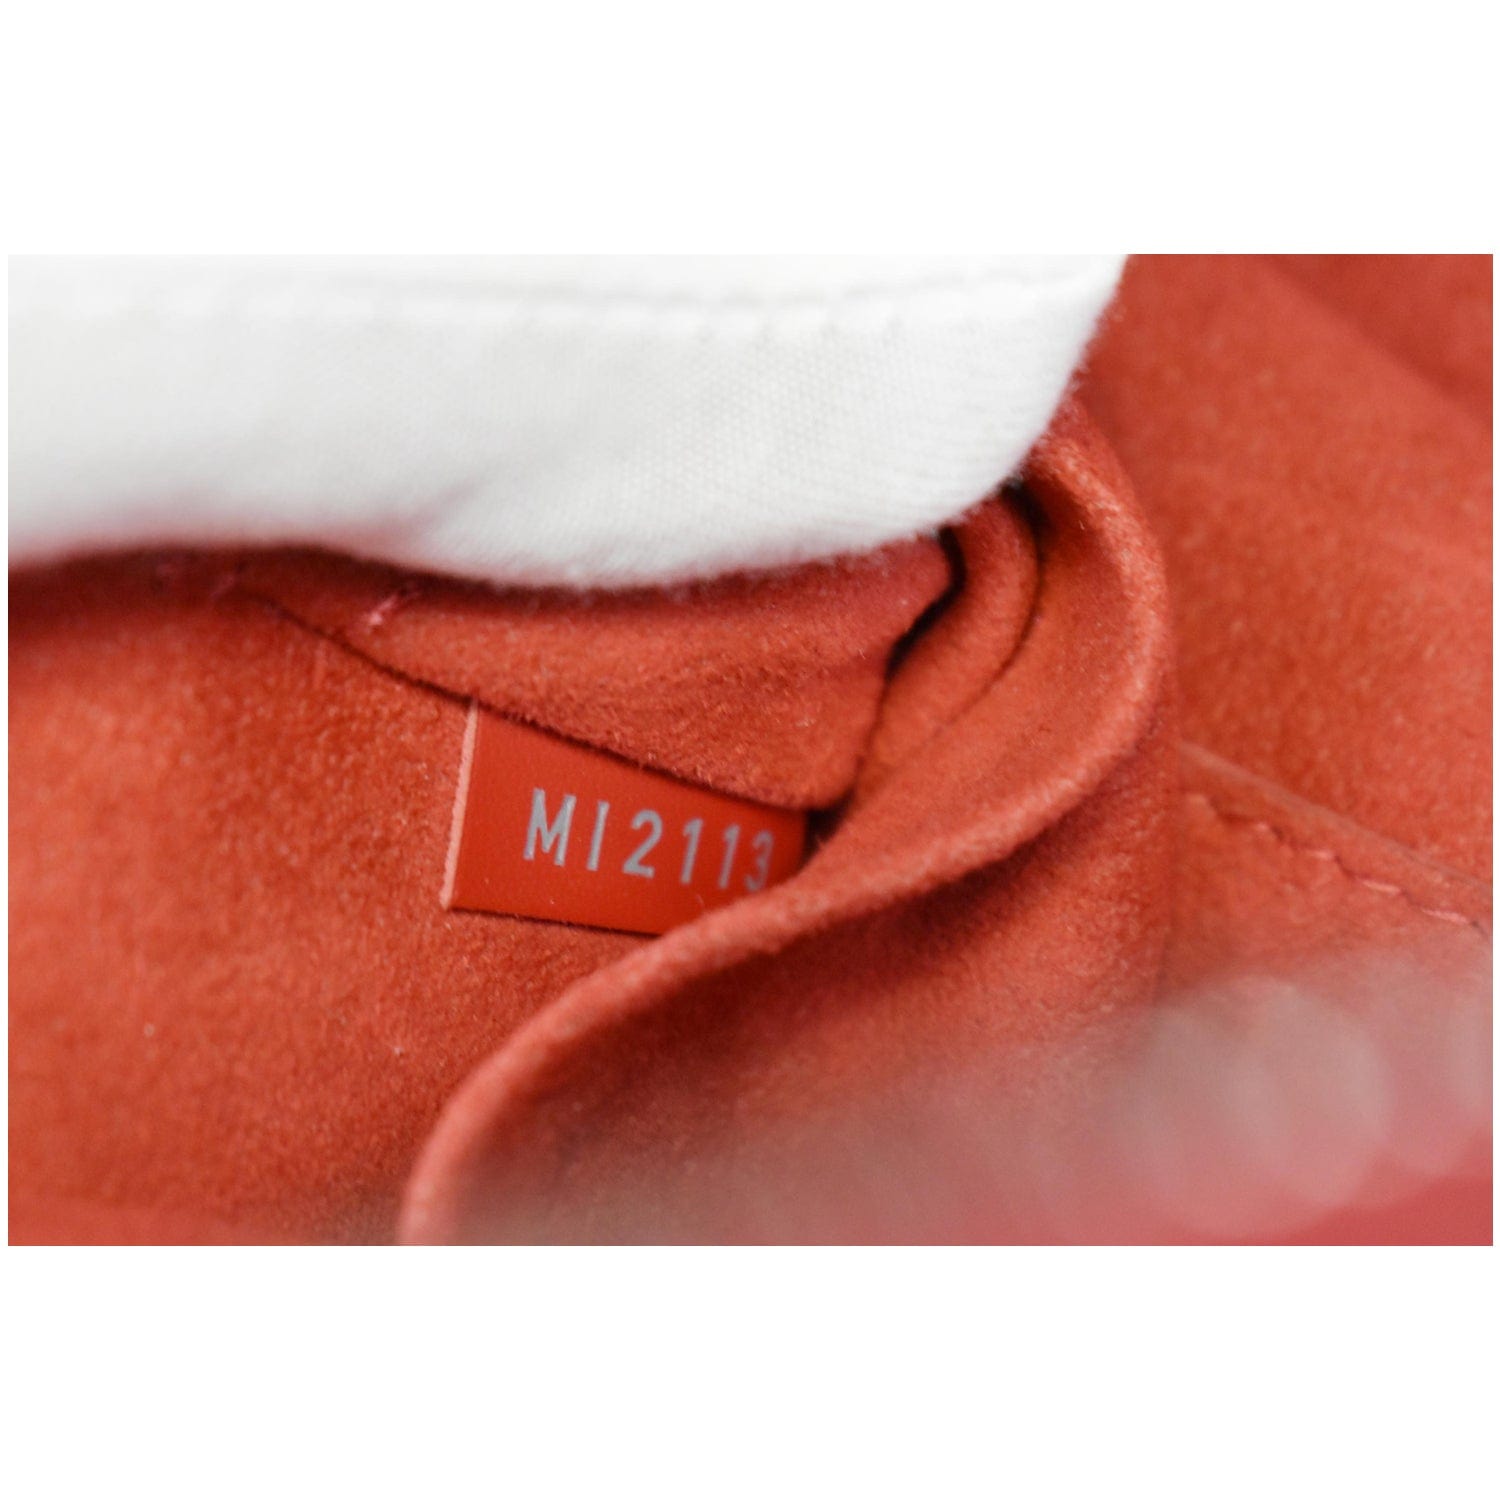 Louis Vuitton // Red Epi Leather Alma Bag – VSP Consignment